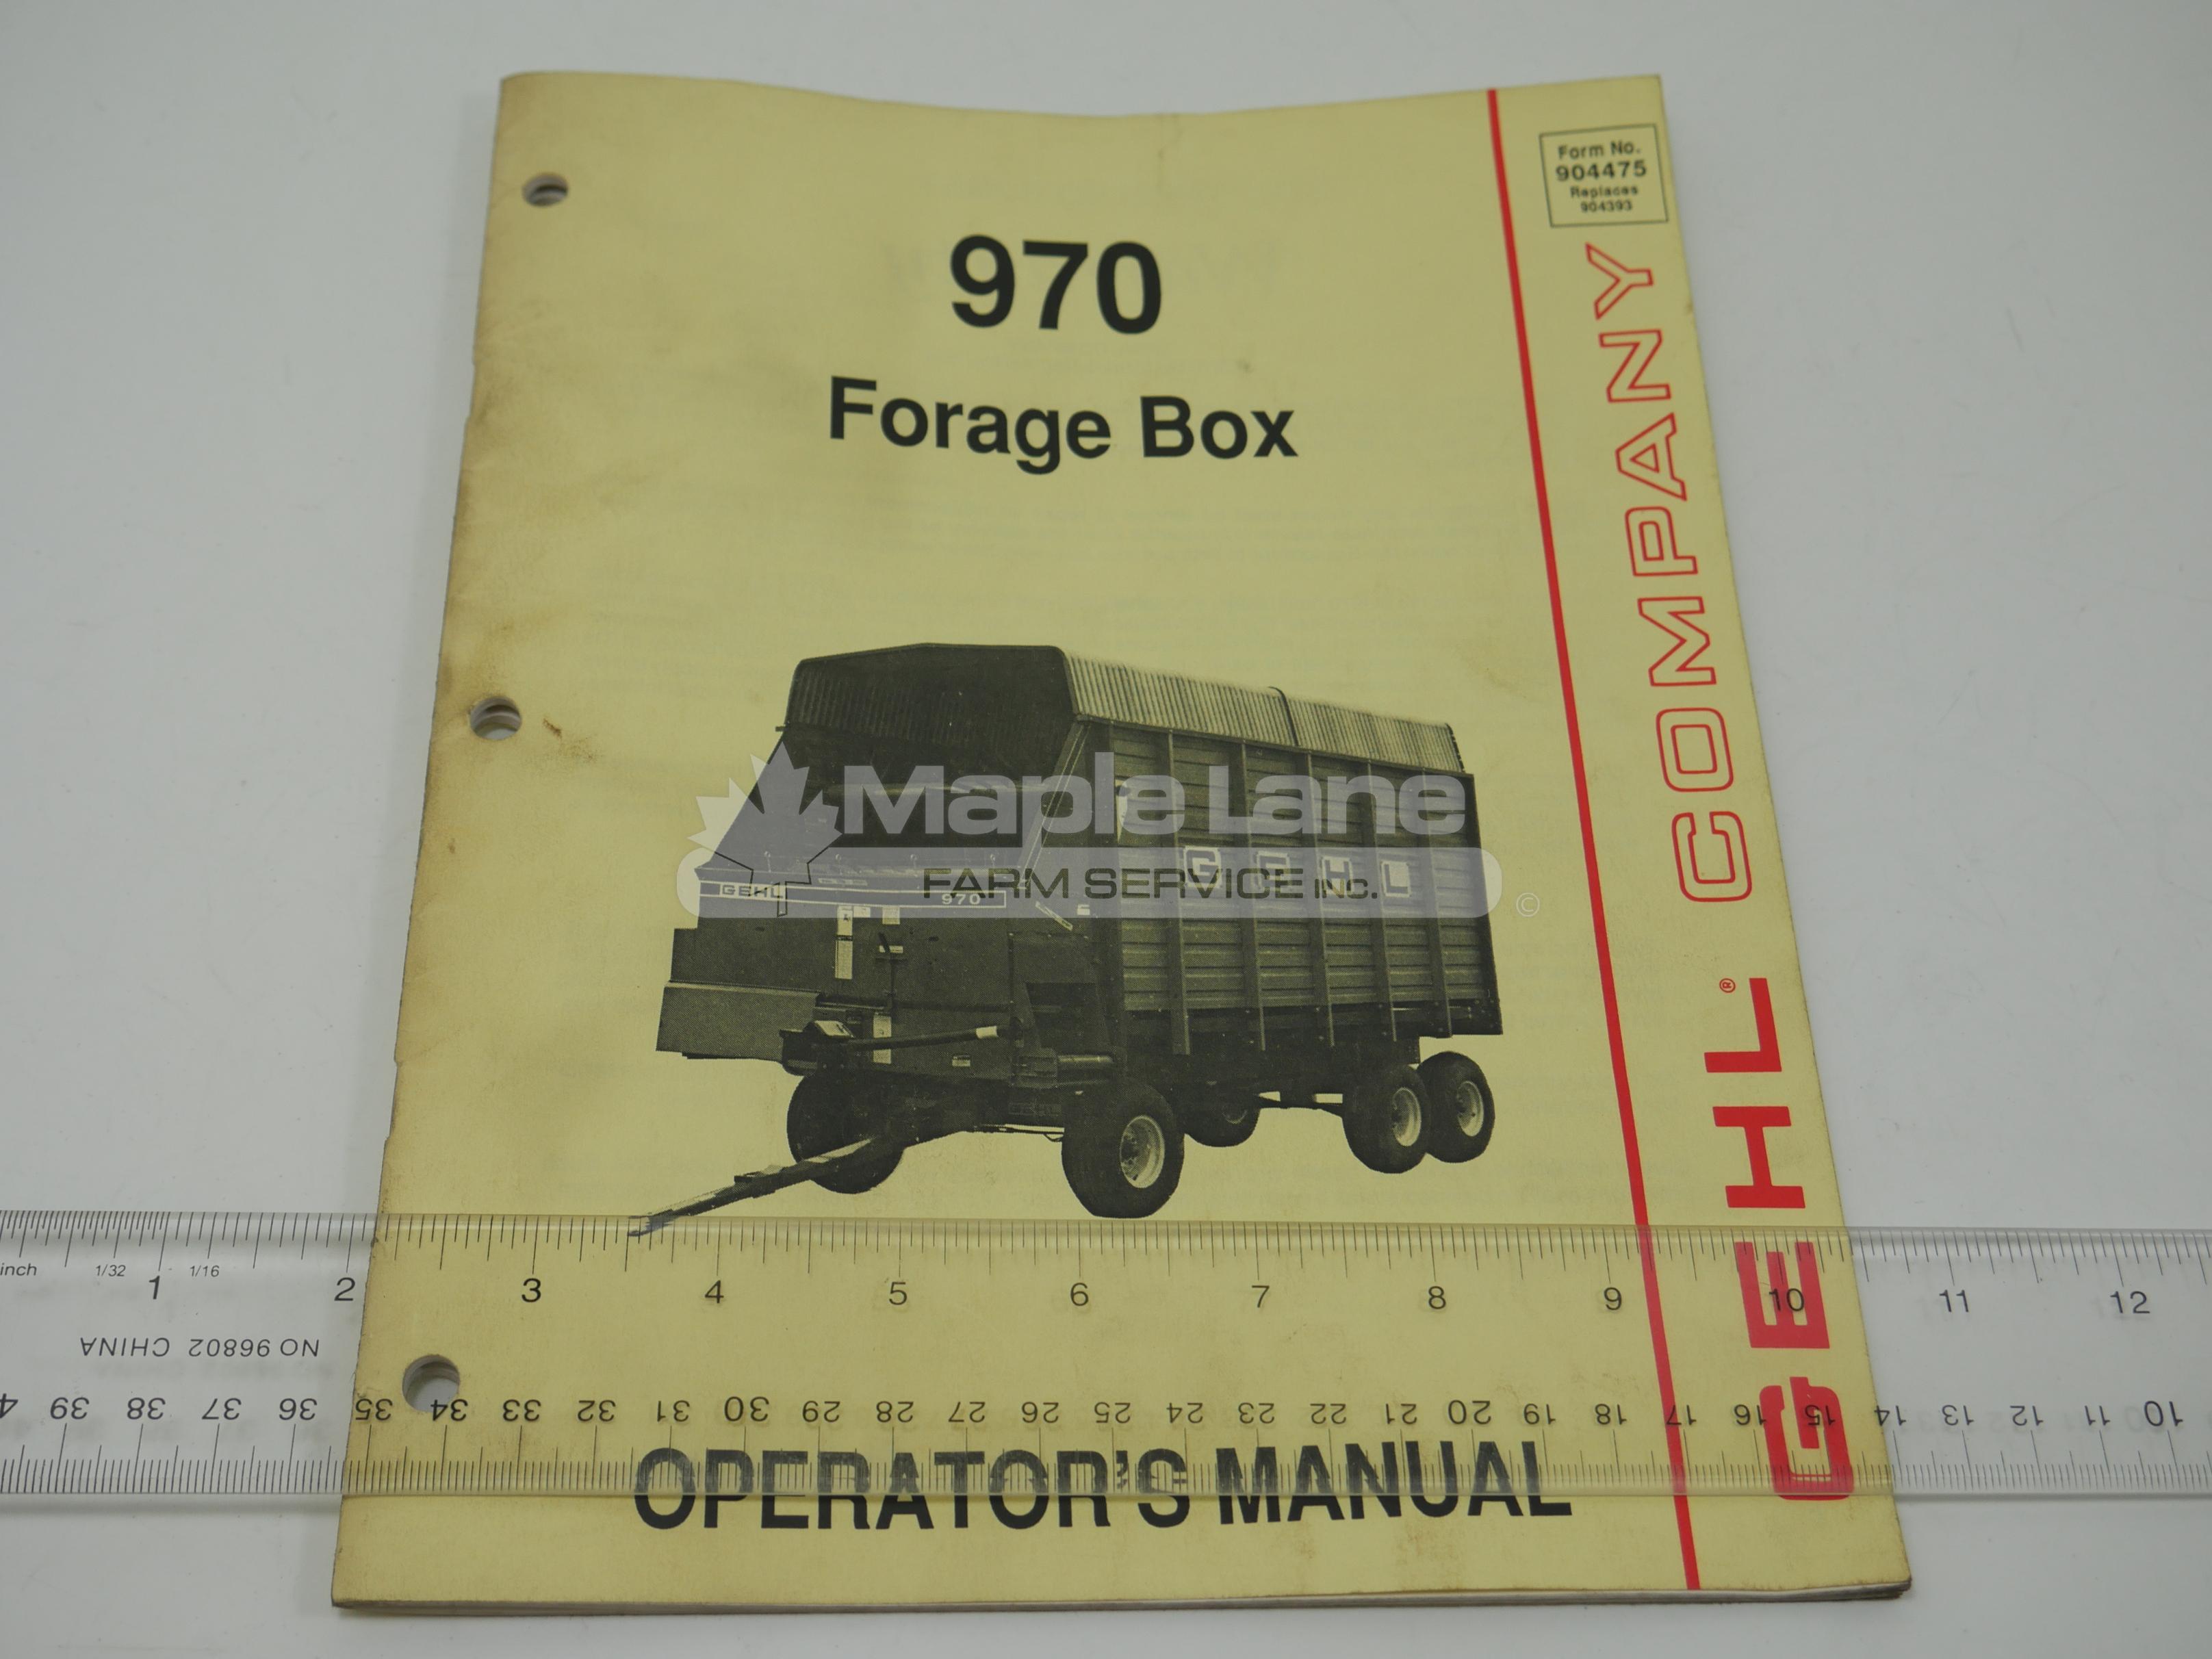 904475 Operator Manual